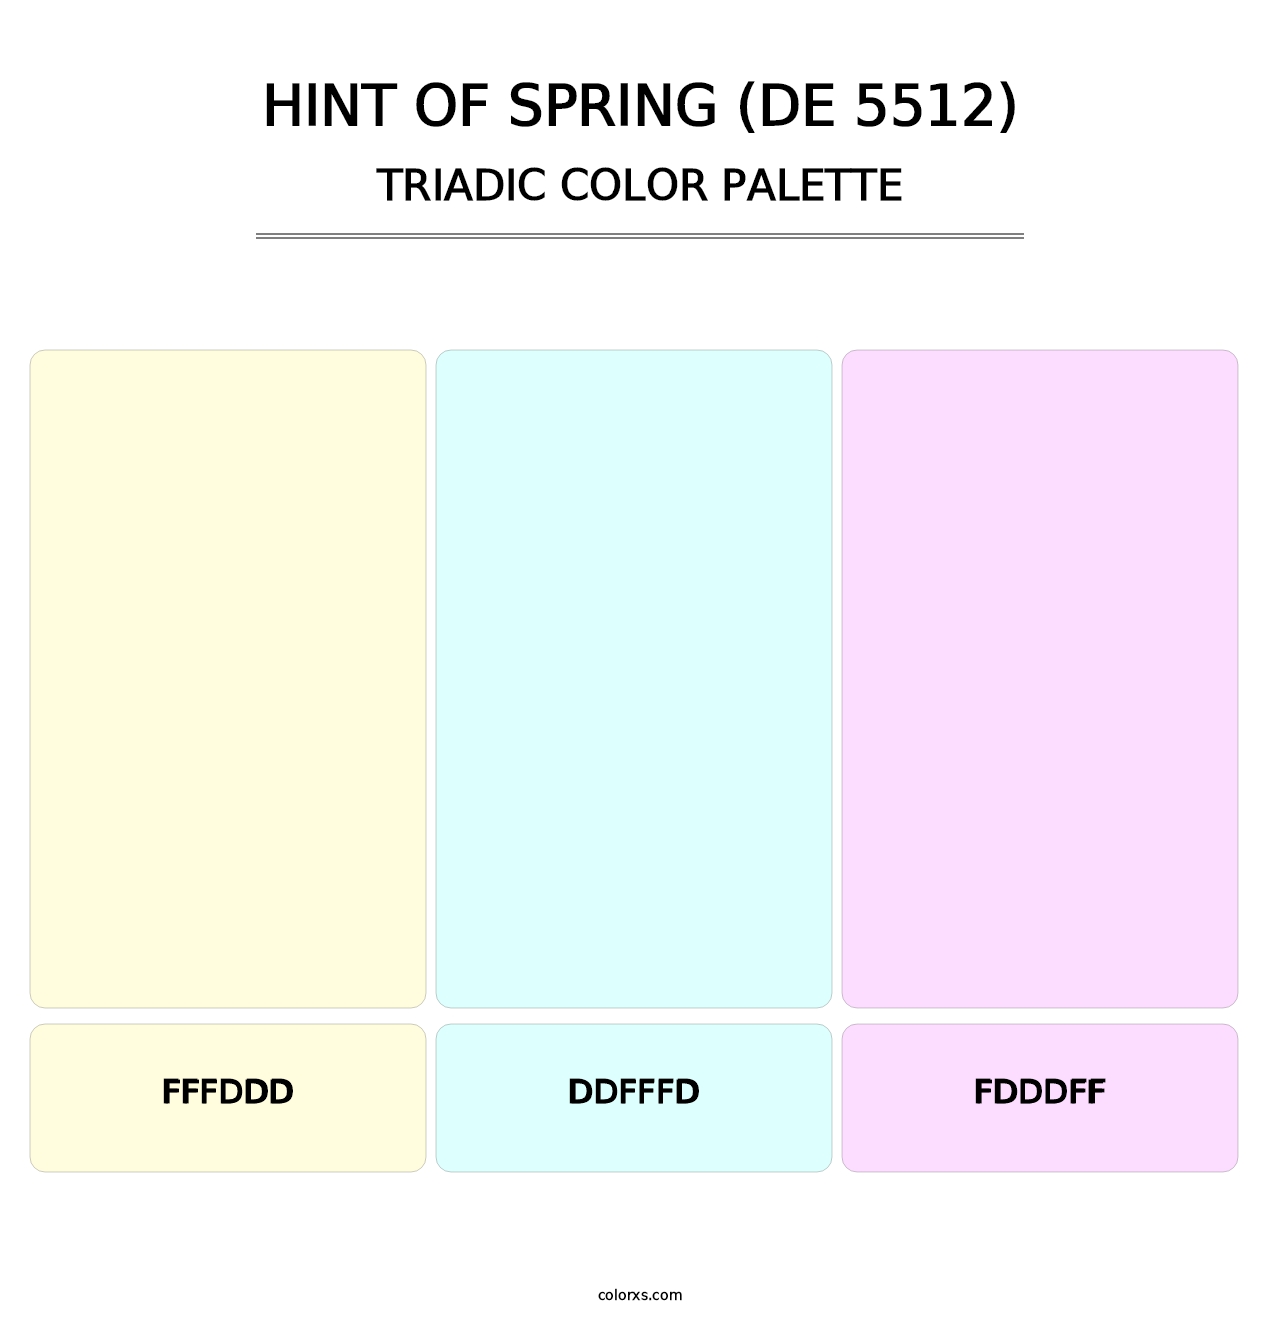 Hint of Spring (DE 5512) - Triadic Color Palette